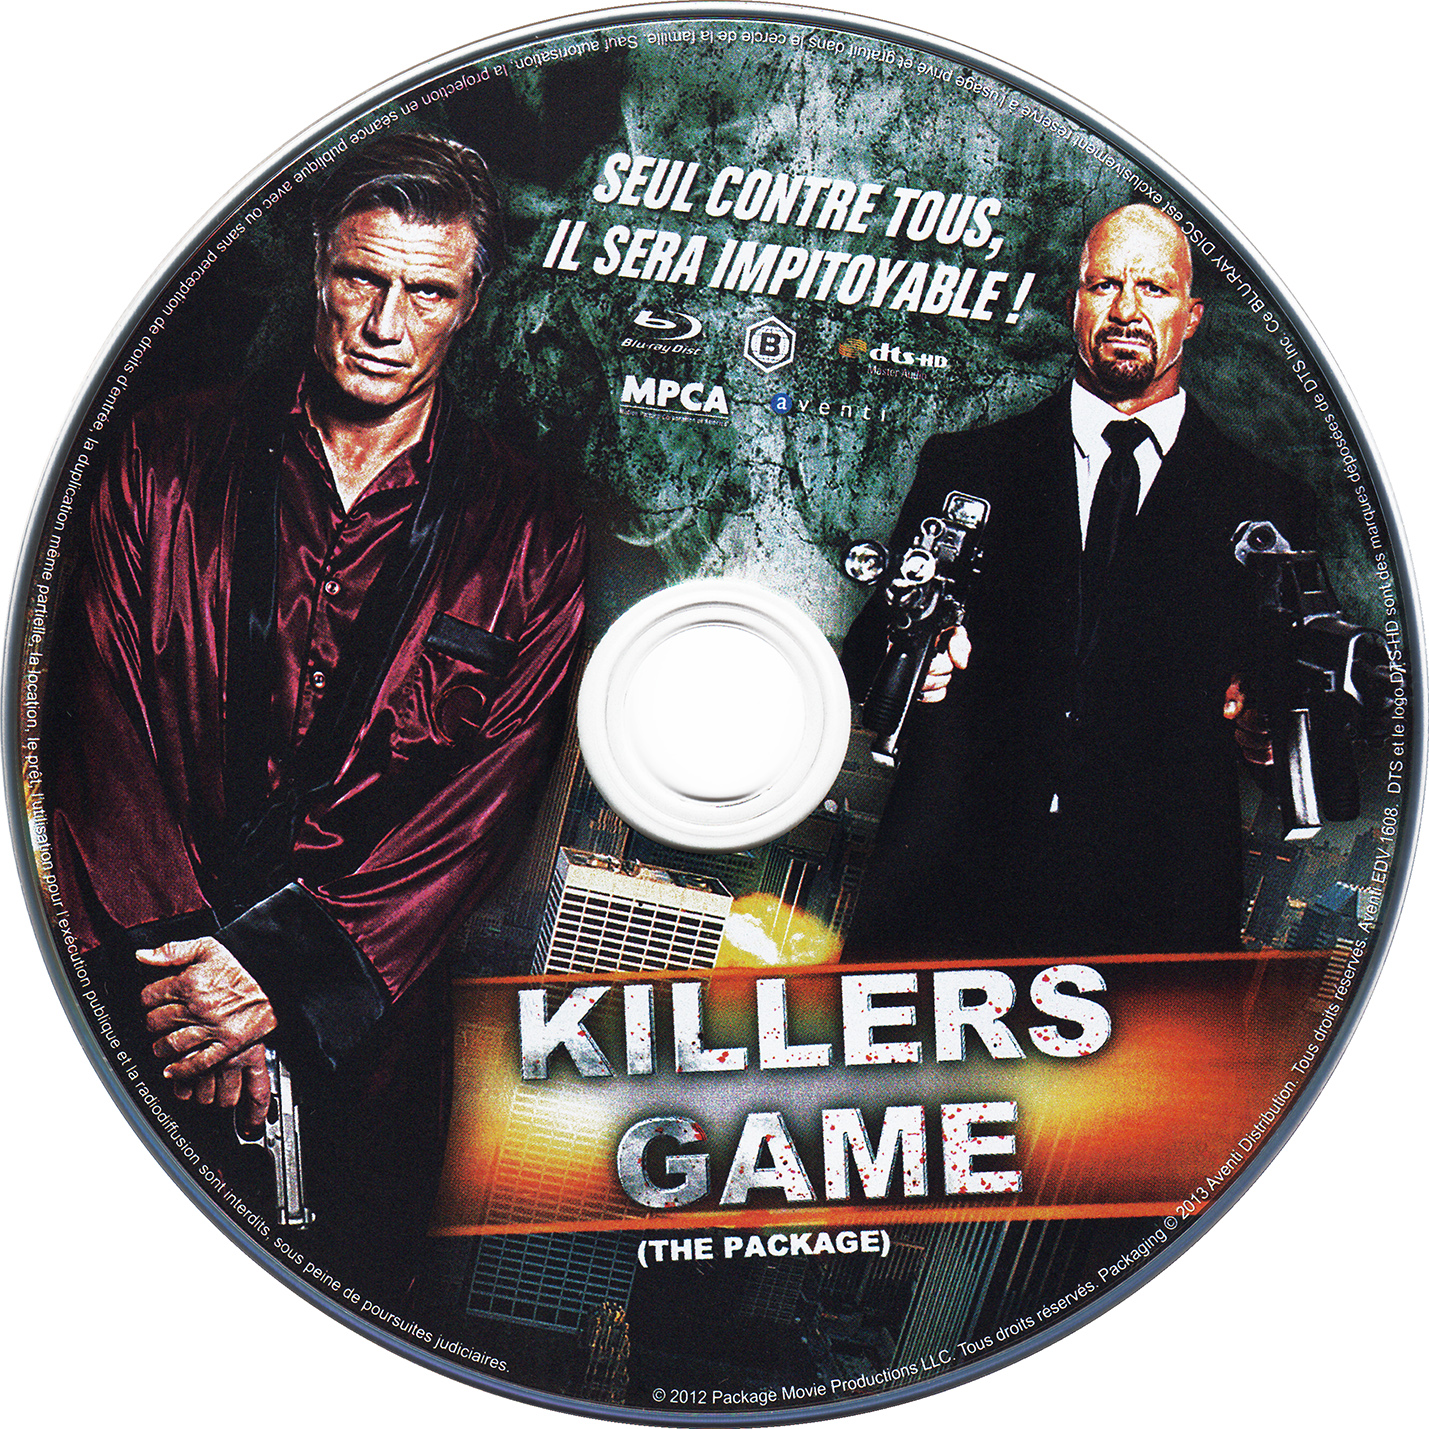 Killers game (BLU-RAY)